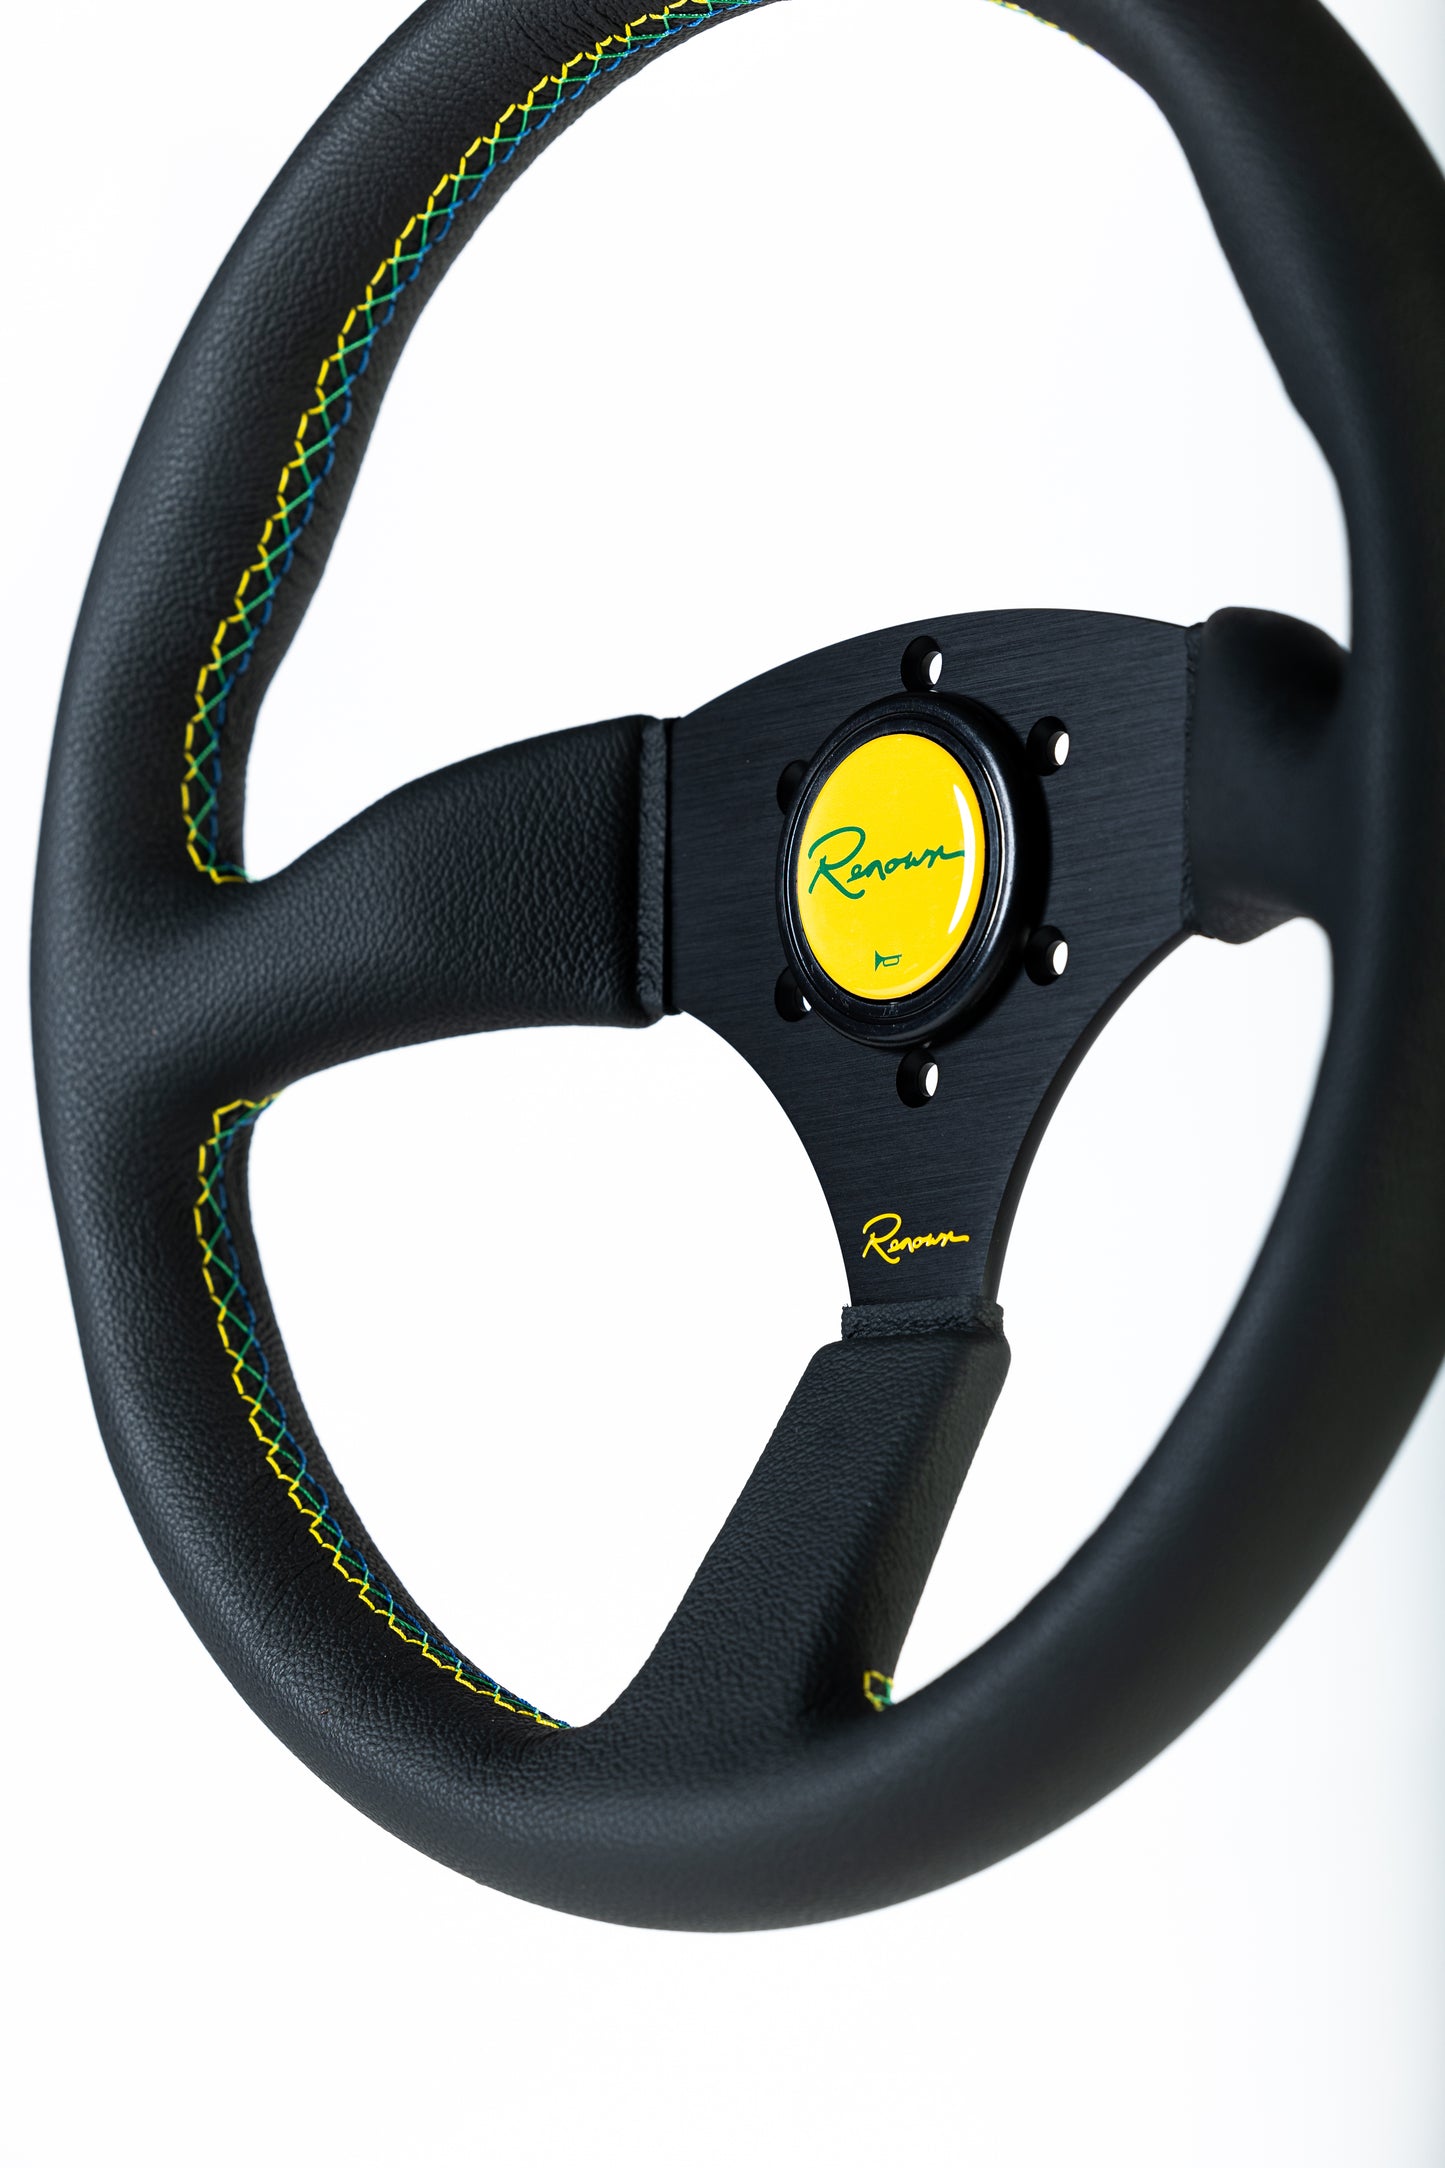 LIMITED Renown 130R Brazil Steering Wheel